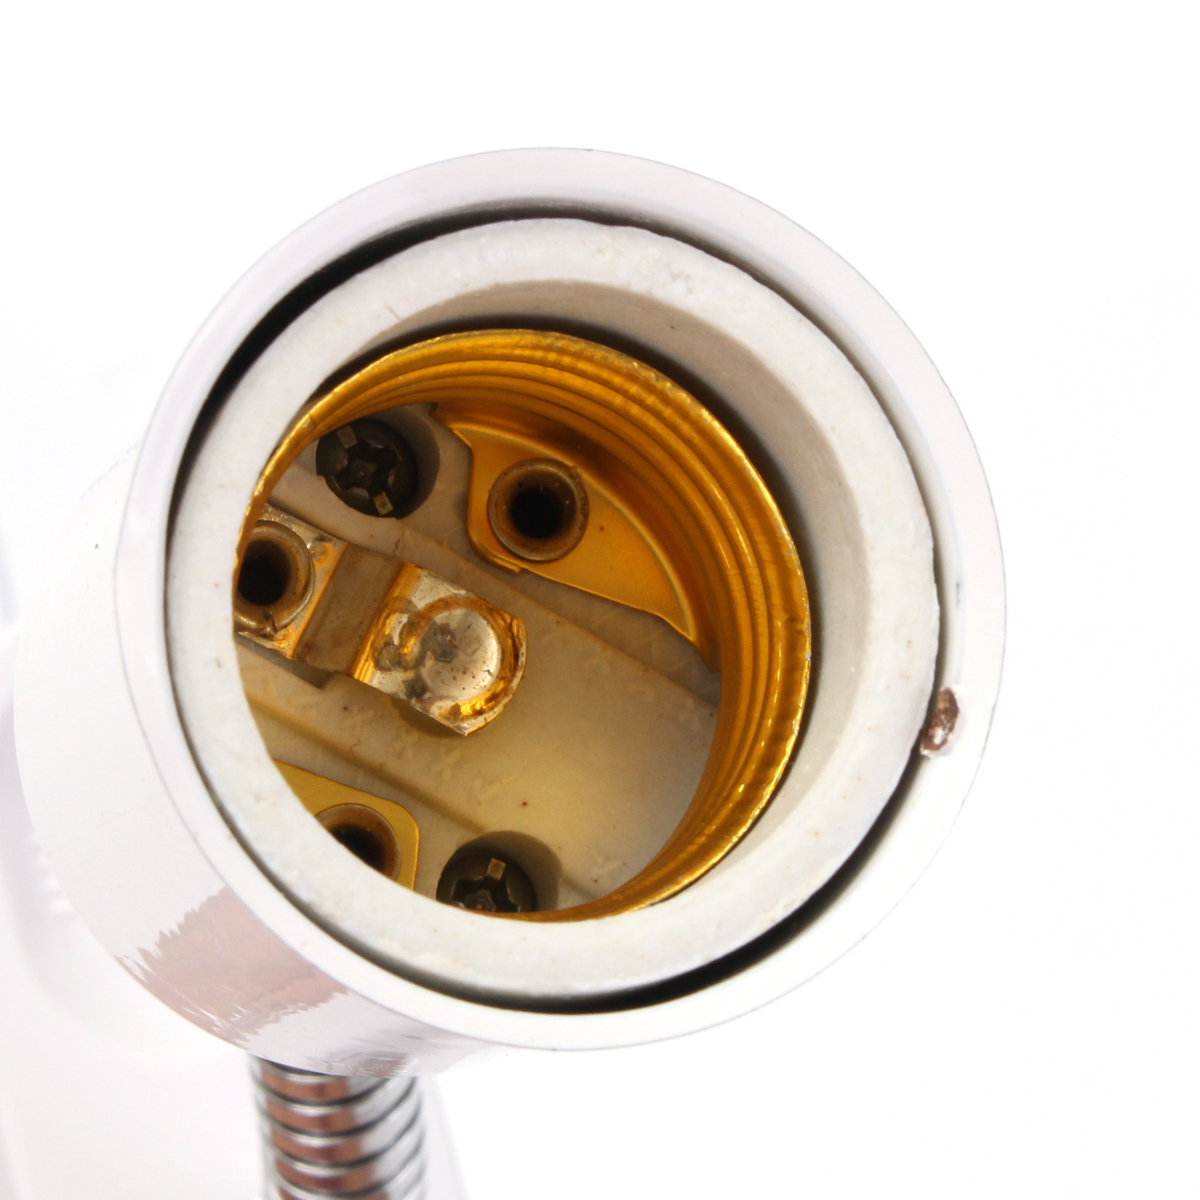 10CM-E27-Flexible-Pet-LED-Light-Lamp-Bulb-Adapter-Holder-Socket-with-Clip-On-Off-Switch-EU-US-Plug-1309591-4